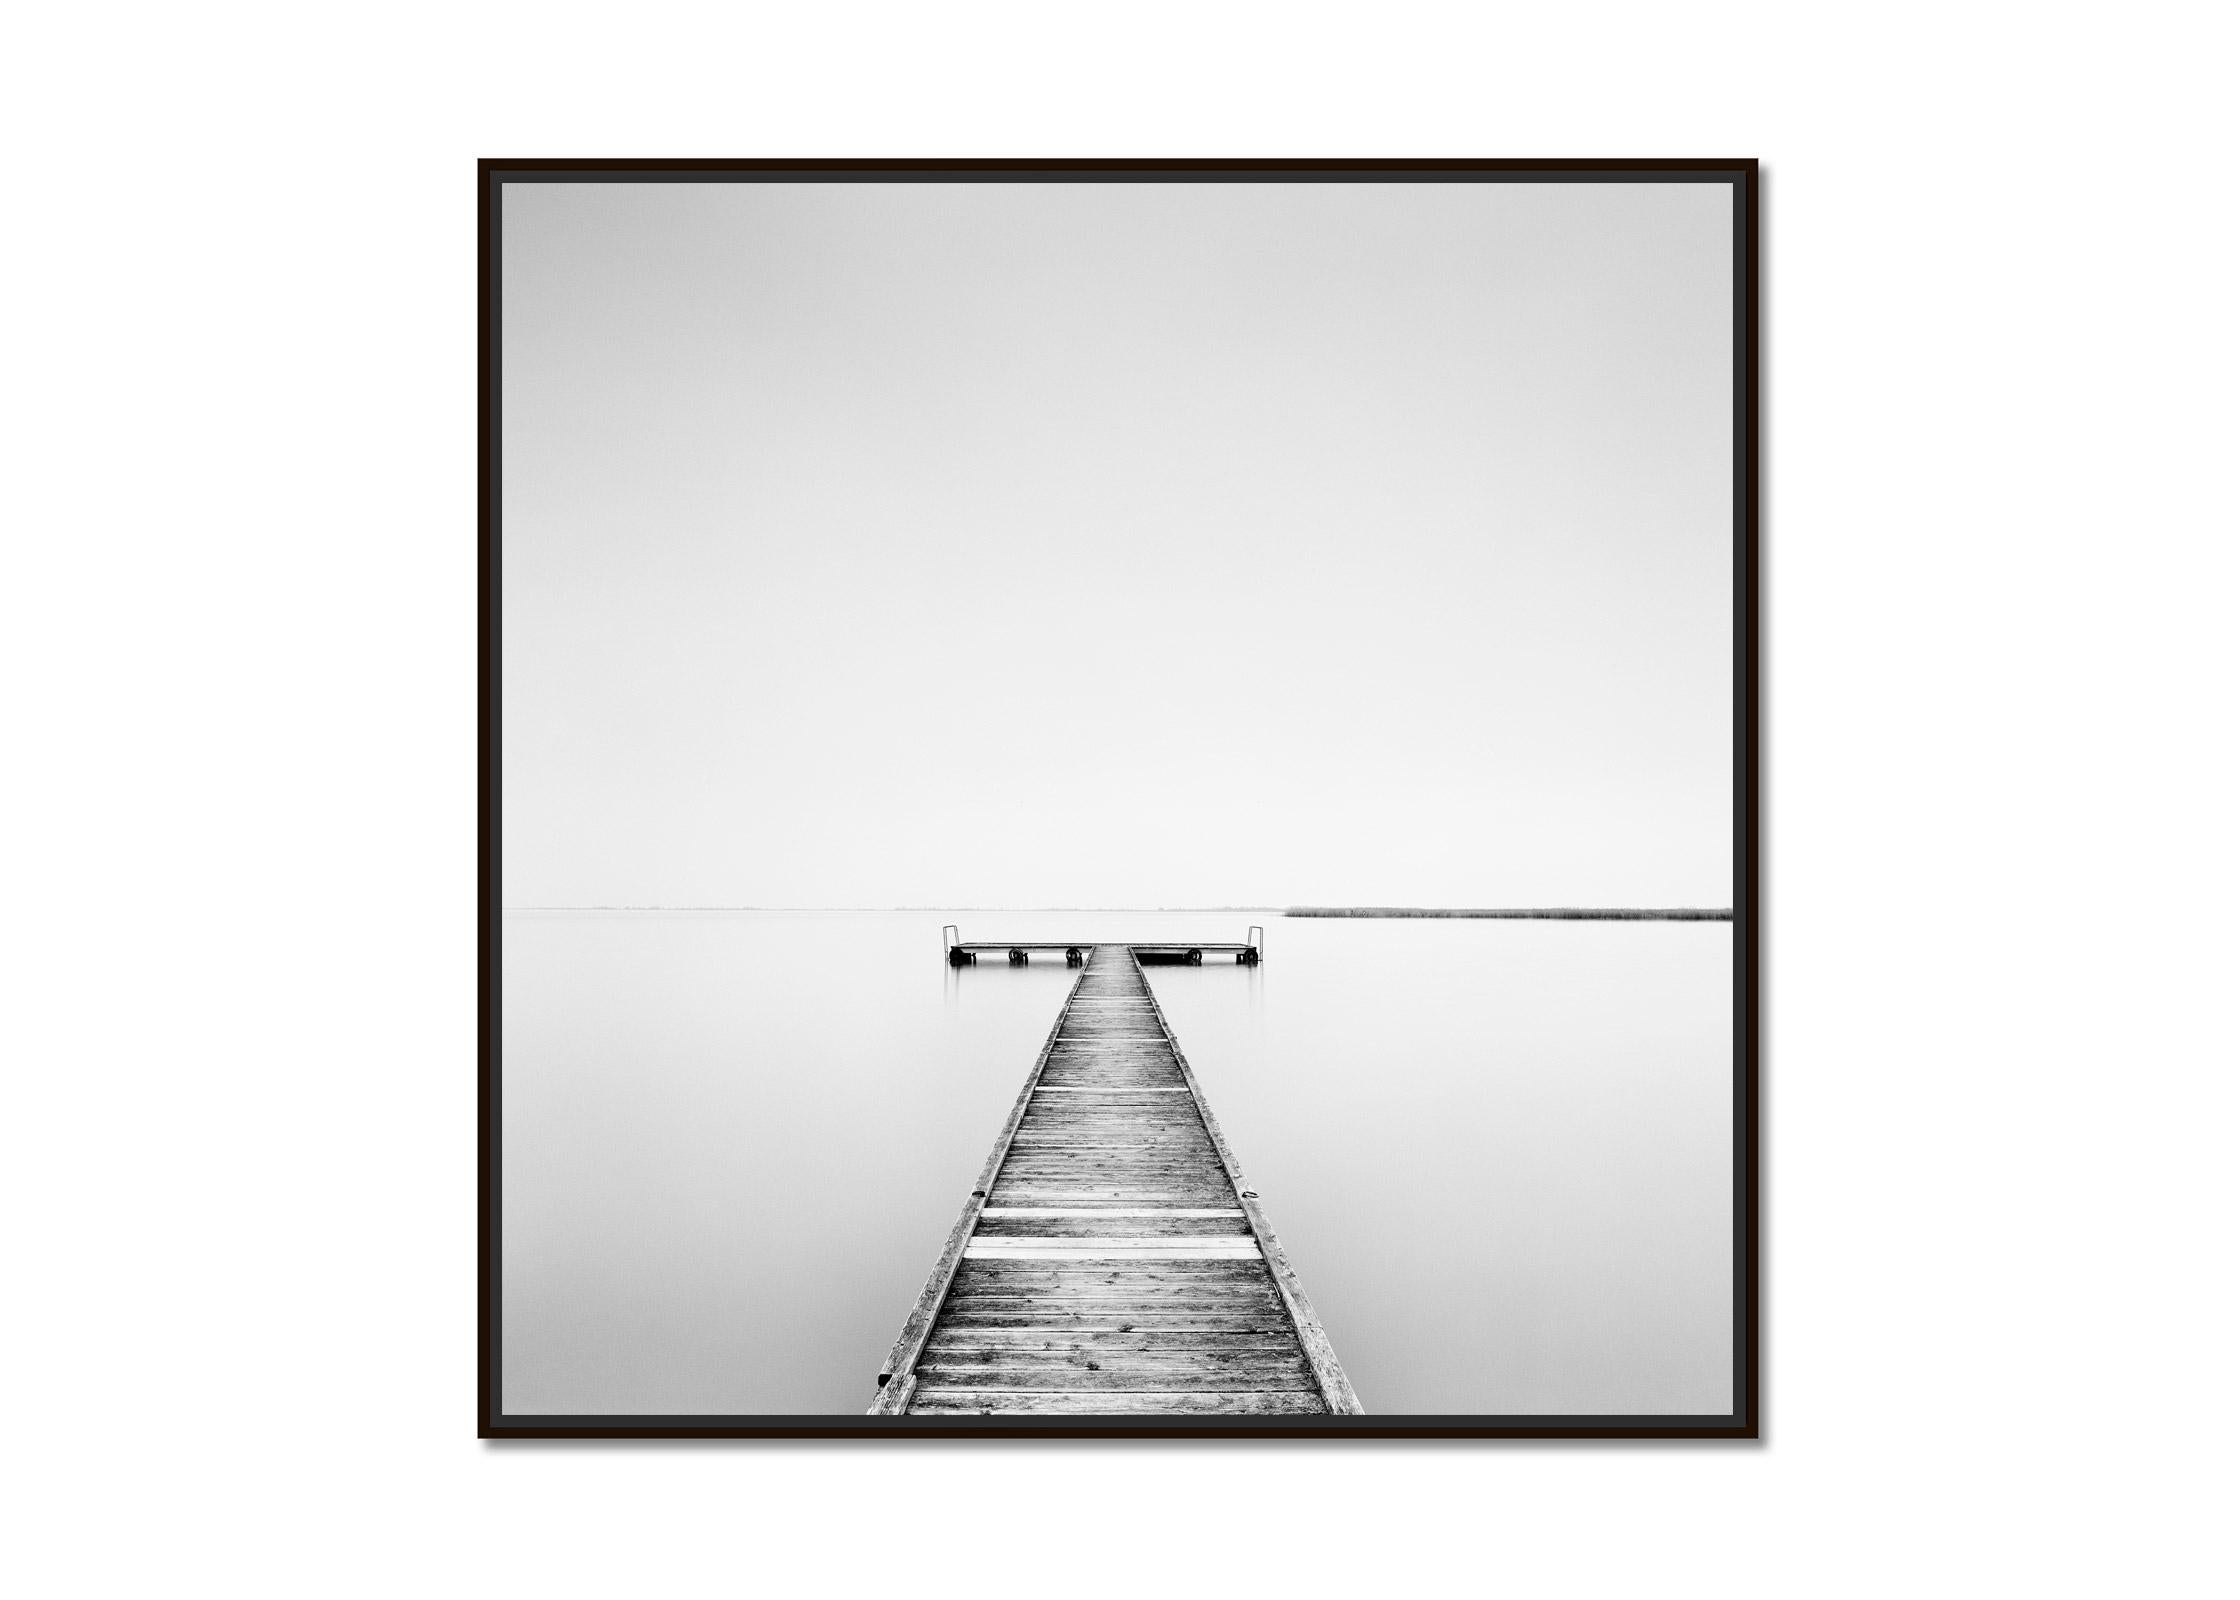 Pier, foggy morning, minimalist black white, photography, fine art landscape - Photograph by Gerald Berghammer